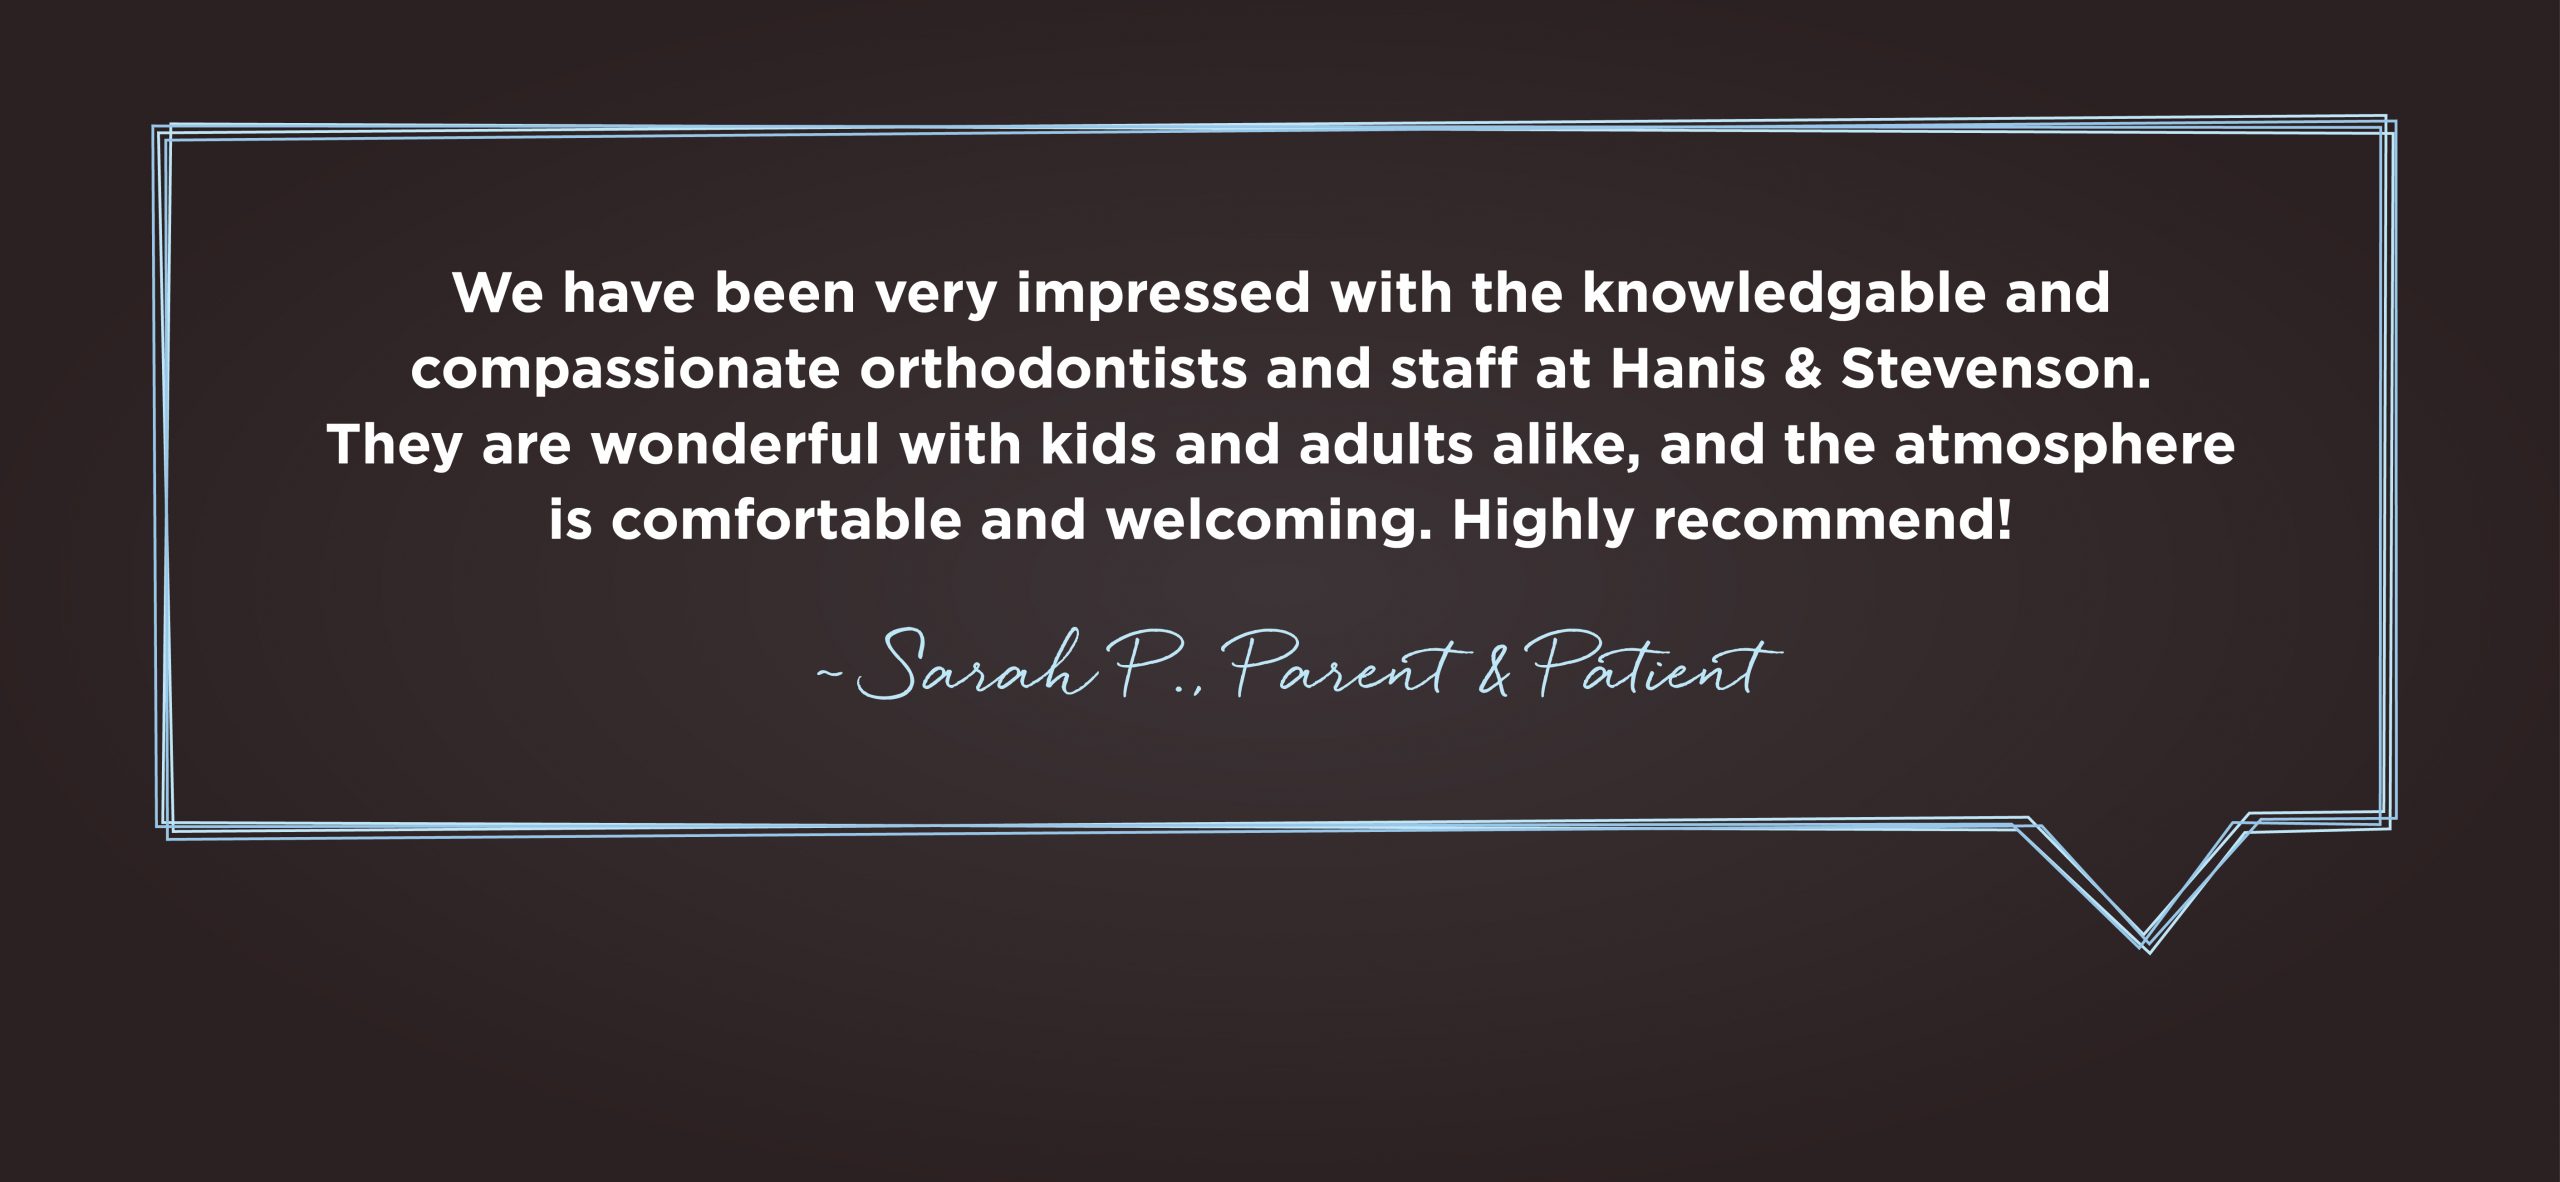 Patient Review for Hanis & Stevenson